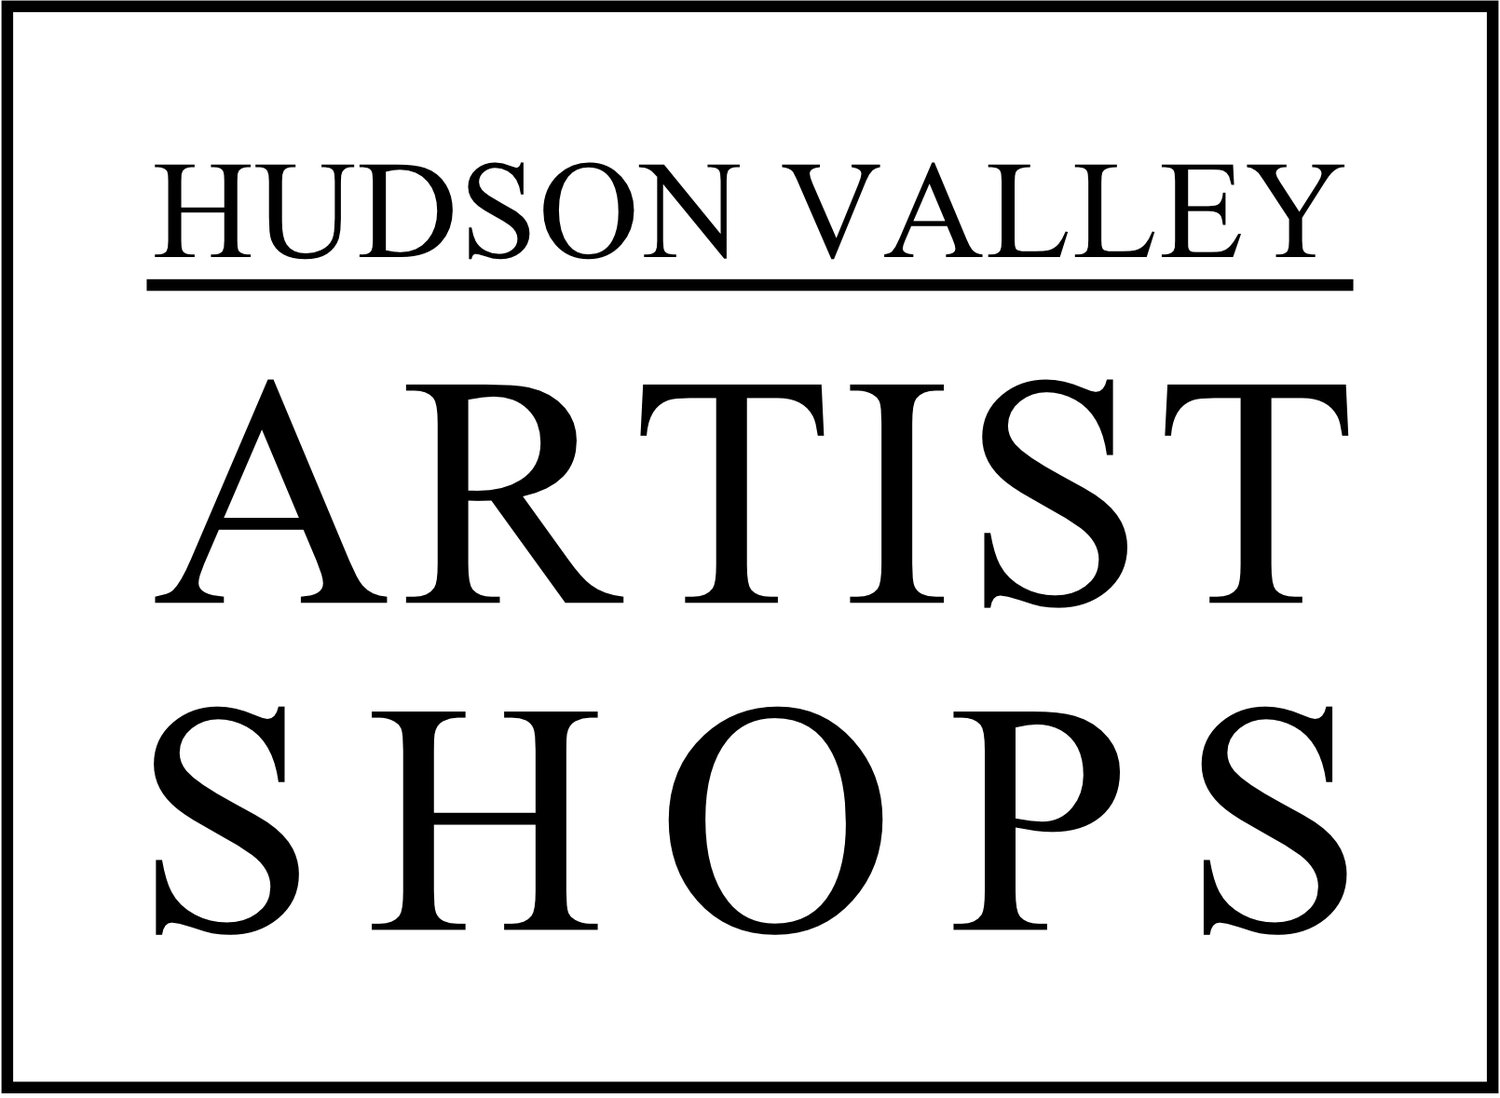 New Paltz Artist Shop — Hudson Valley Artist Shops